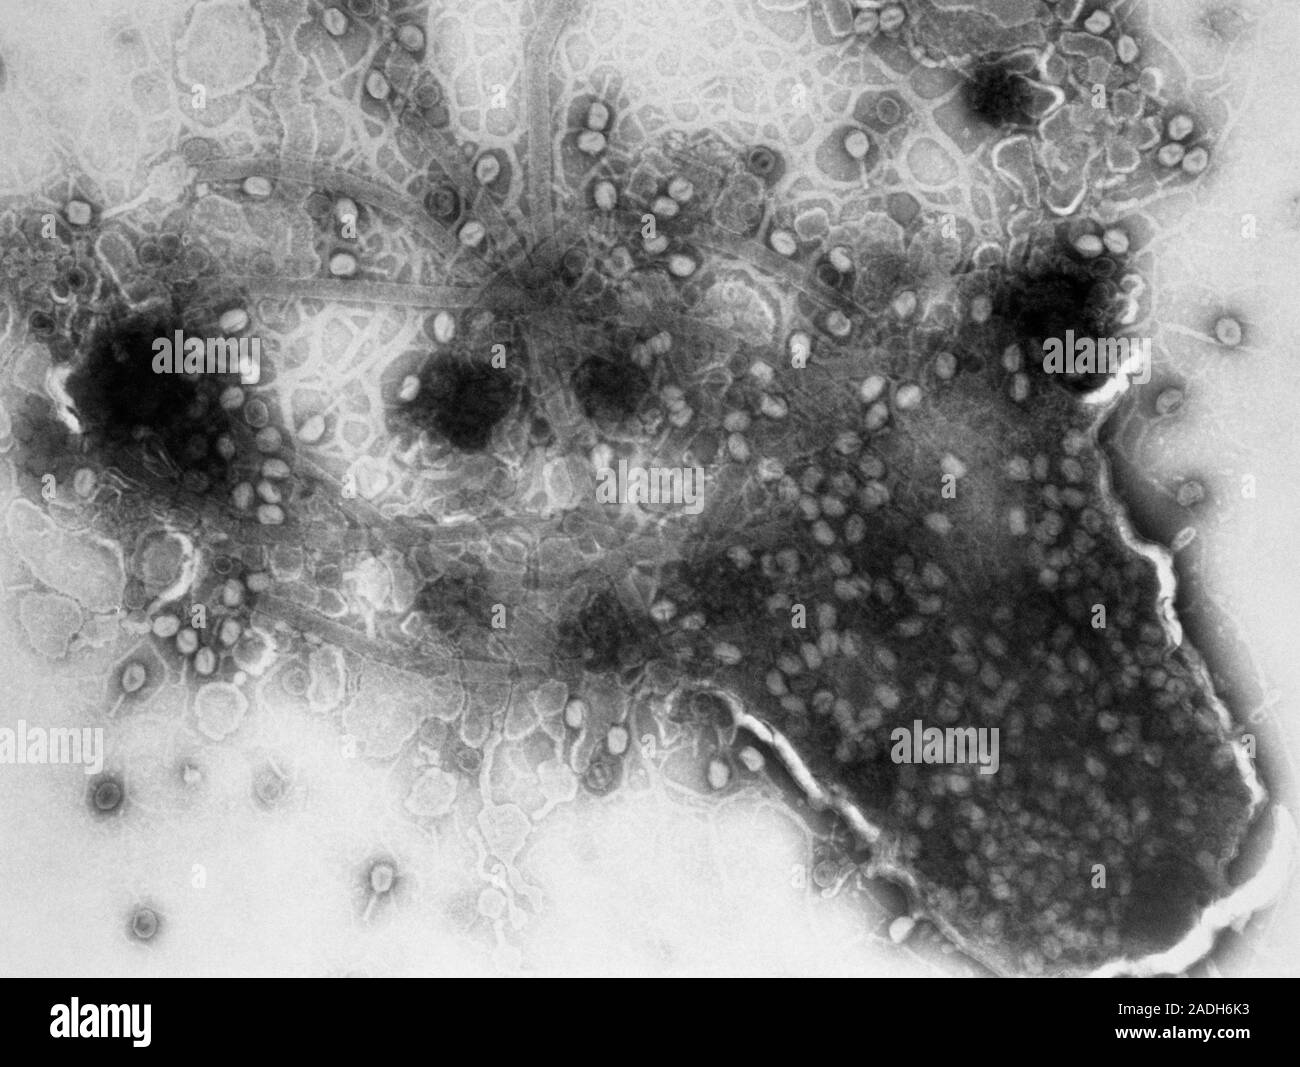 Transmission electron micrograph (TEM) showing lysis (destruction) of a ...